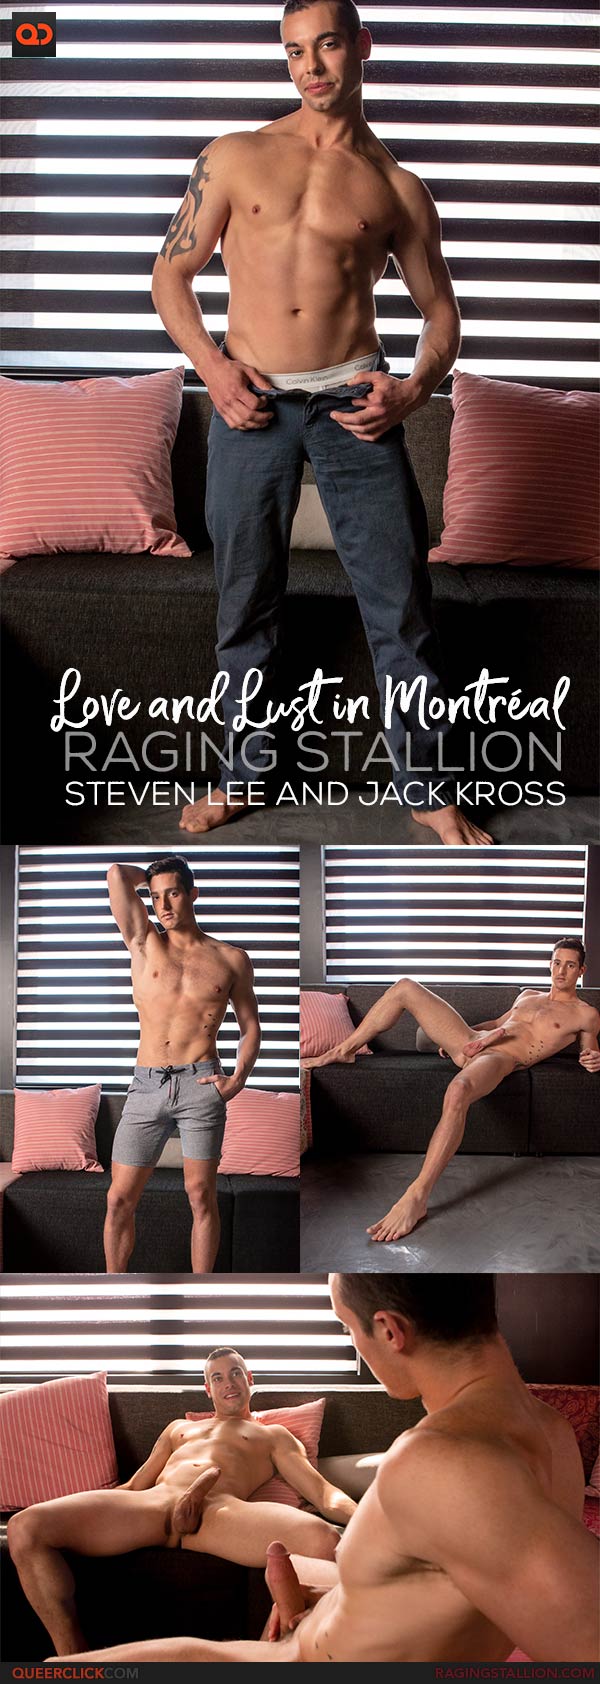 Raging Stallion: Steven Lee and Jack Kross- Love and Lust in Montréal